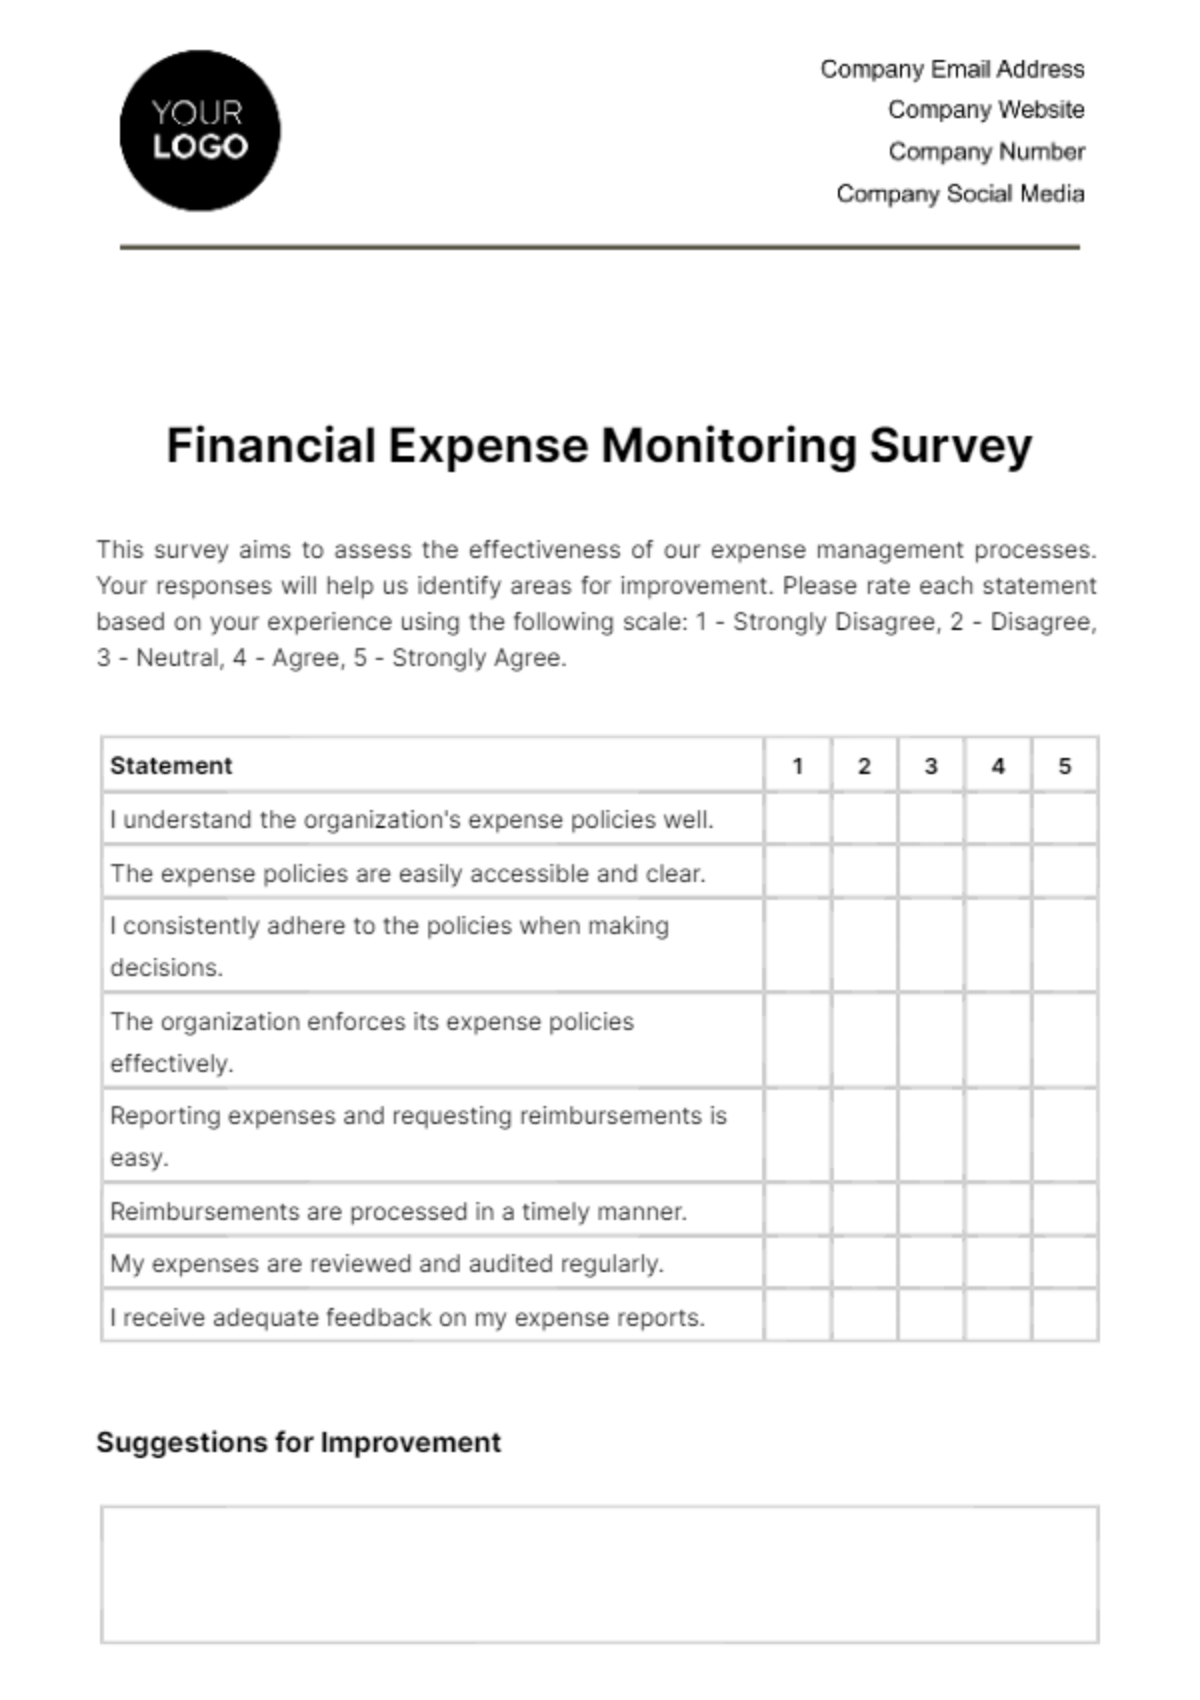 Financial Expense Monitoring Survey Template